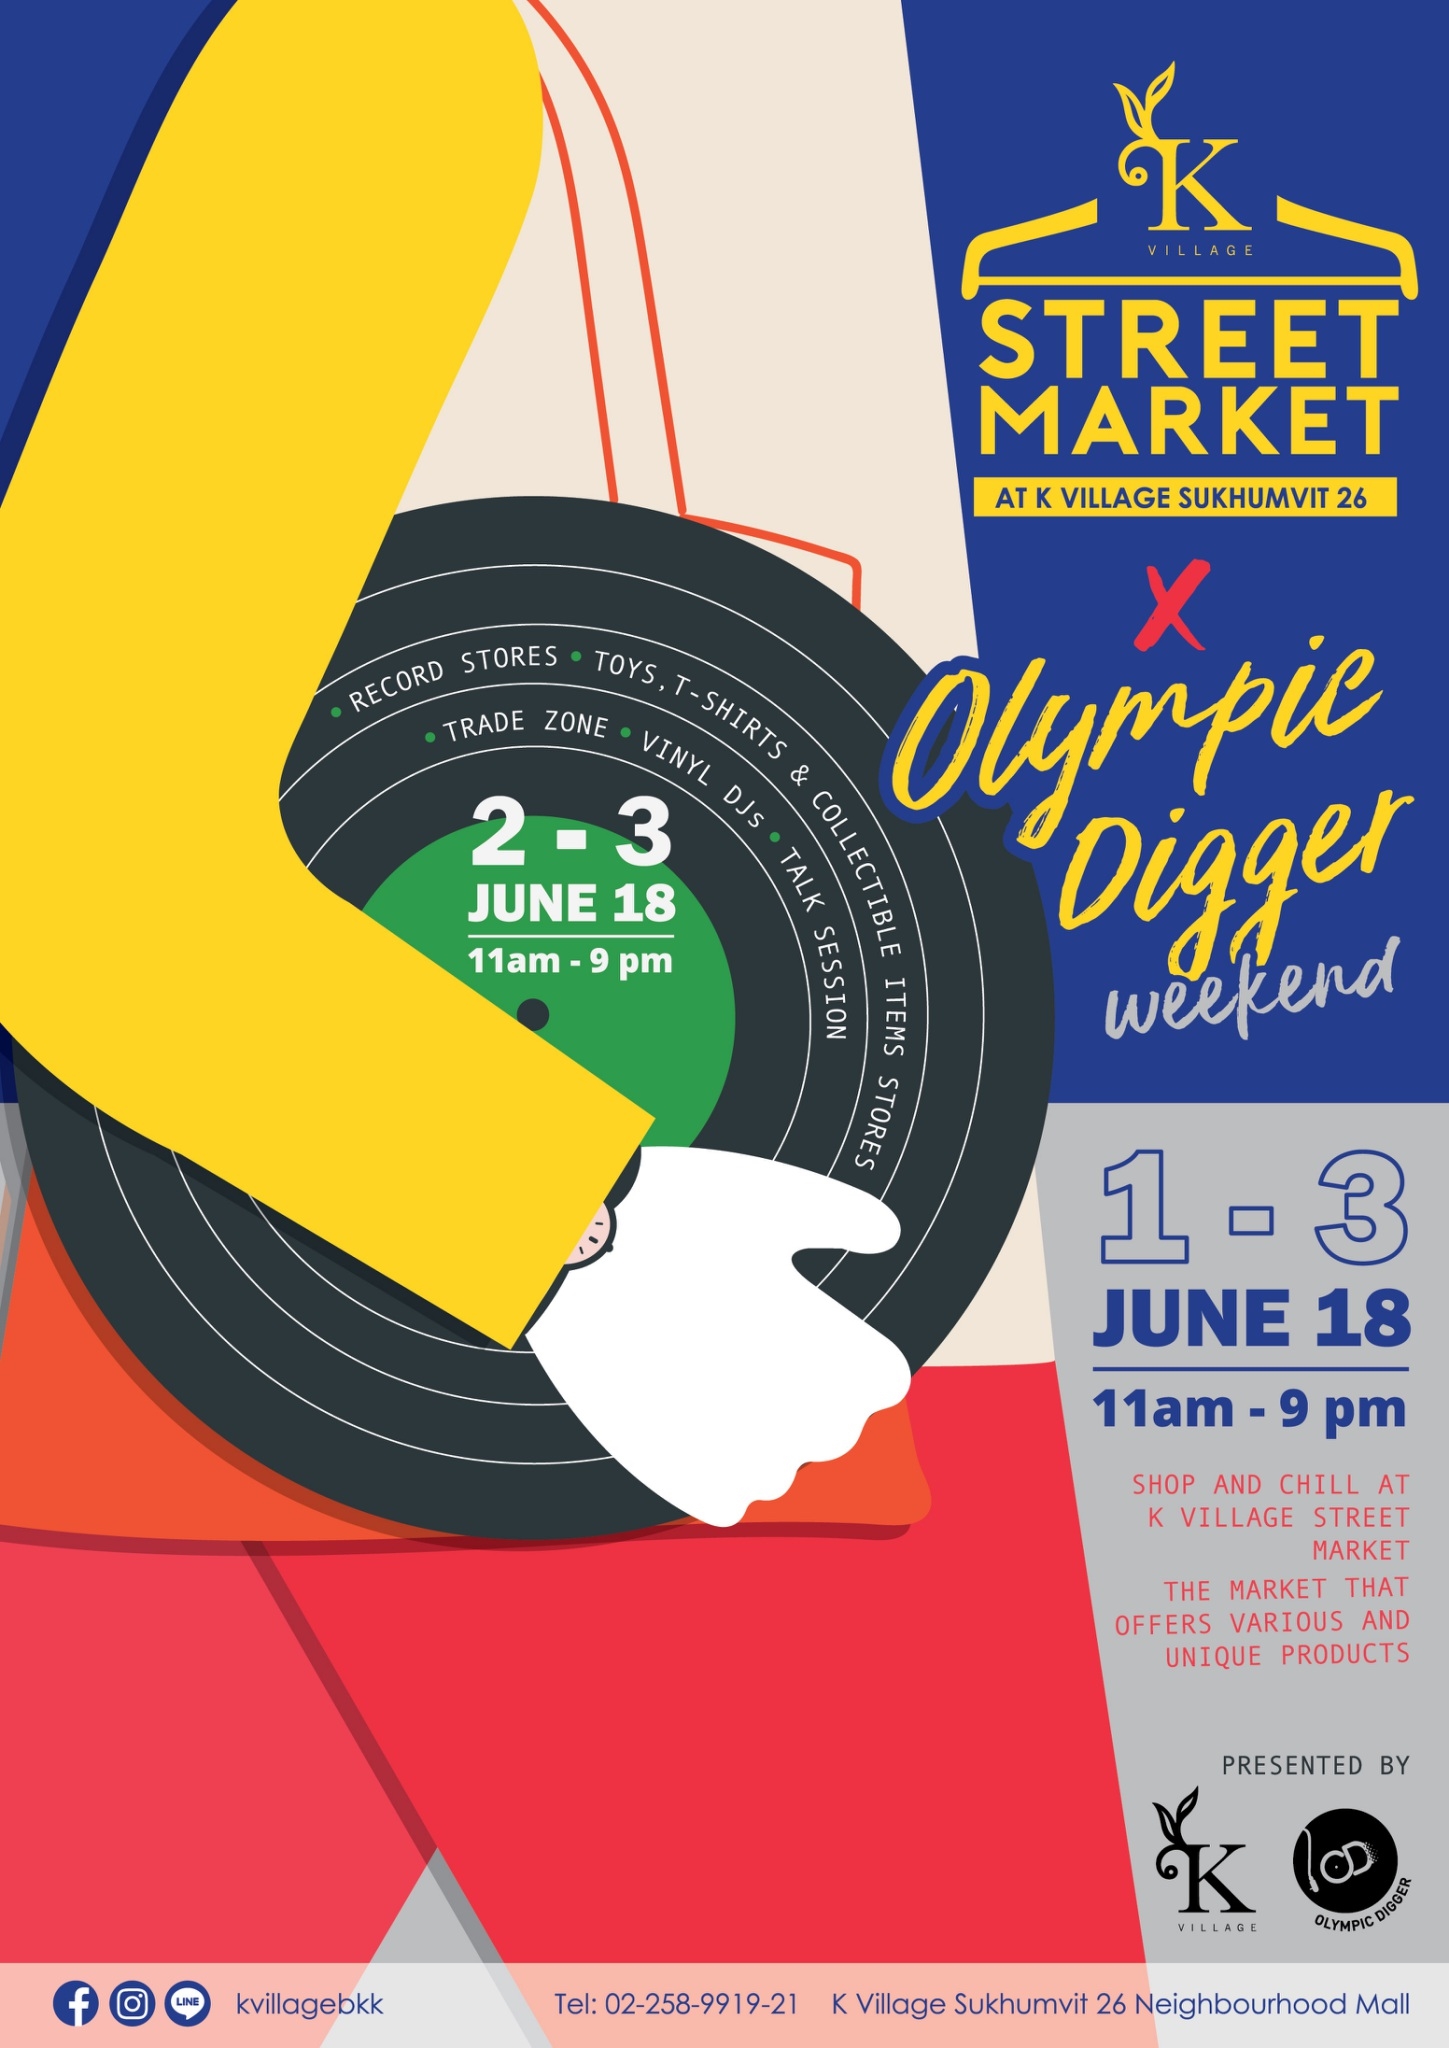 K Village Street Market x Olympic Digger Weekend